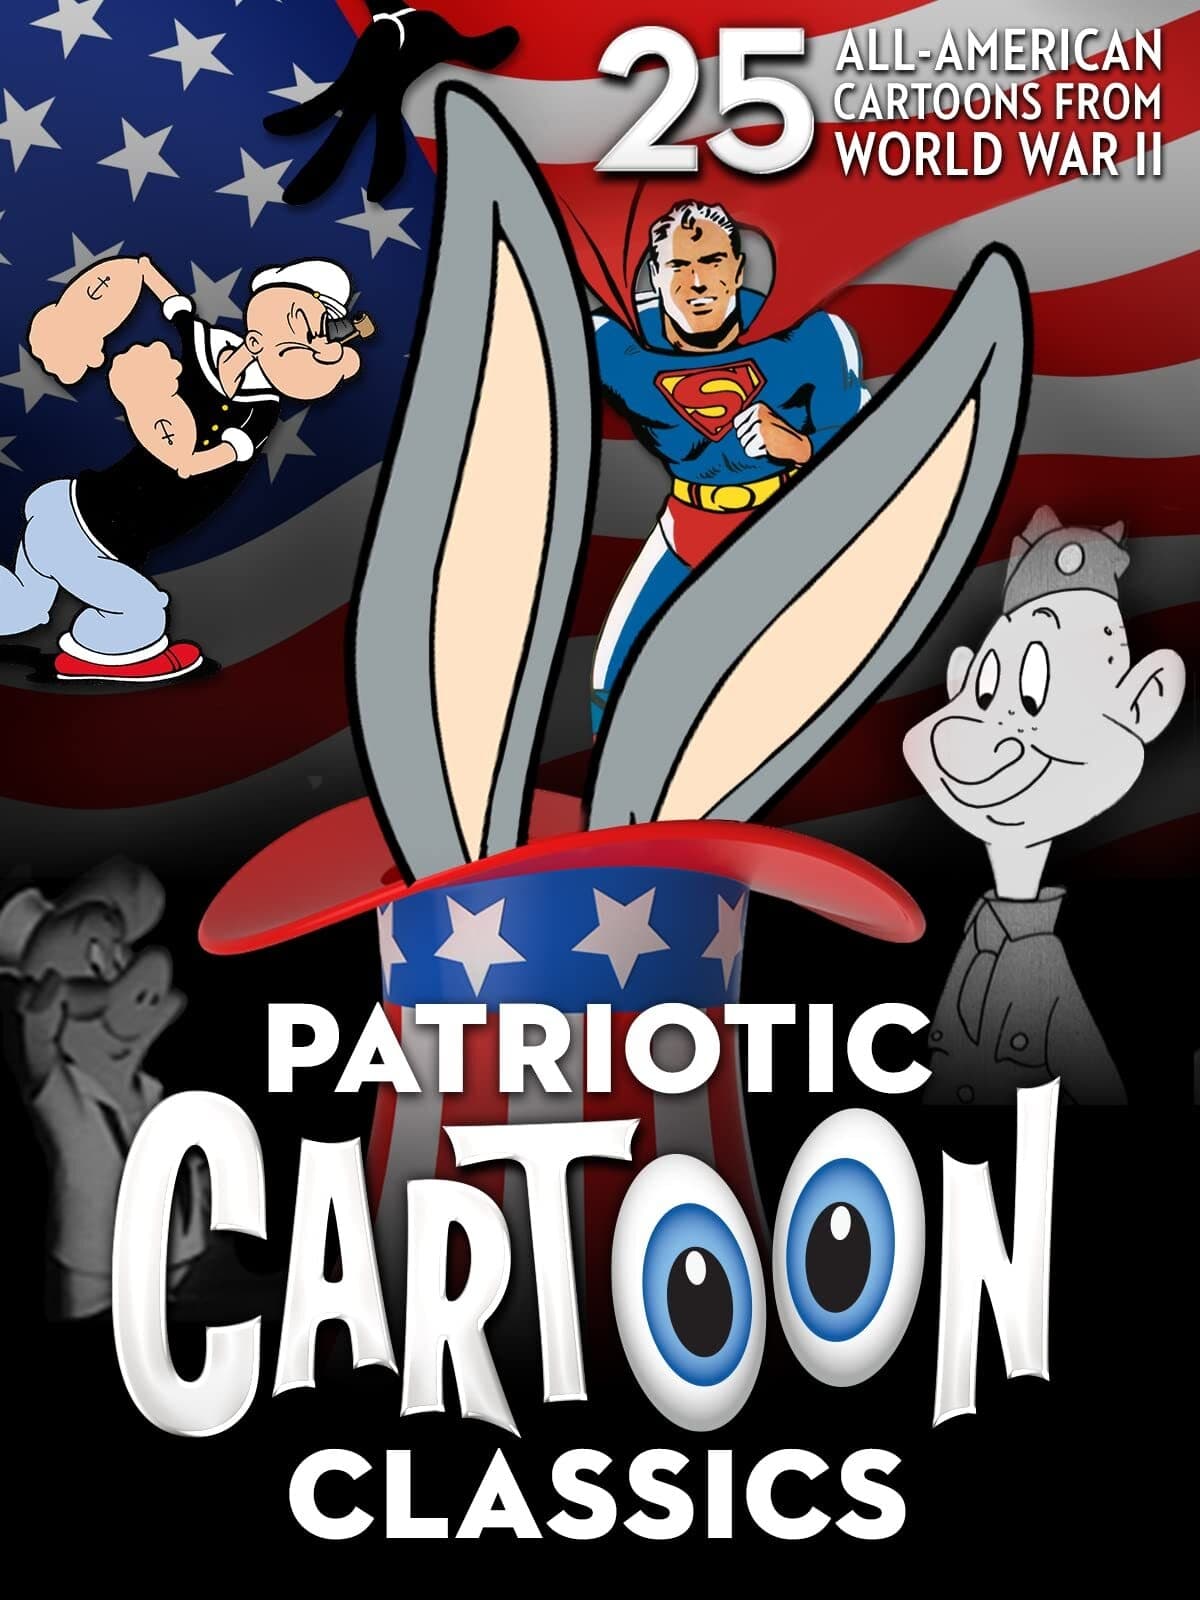 Patriotic Cartoon Classics: 25 All-American Cartoons from World War II